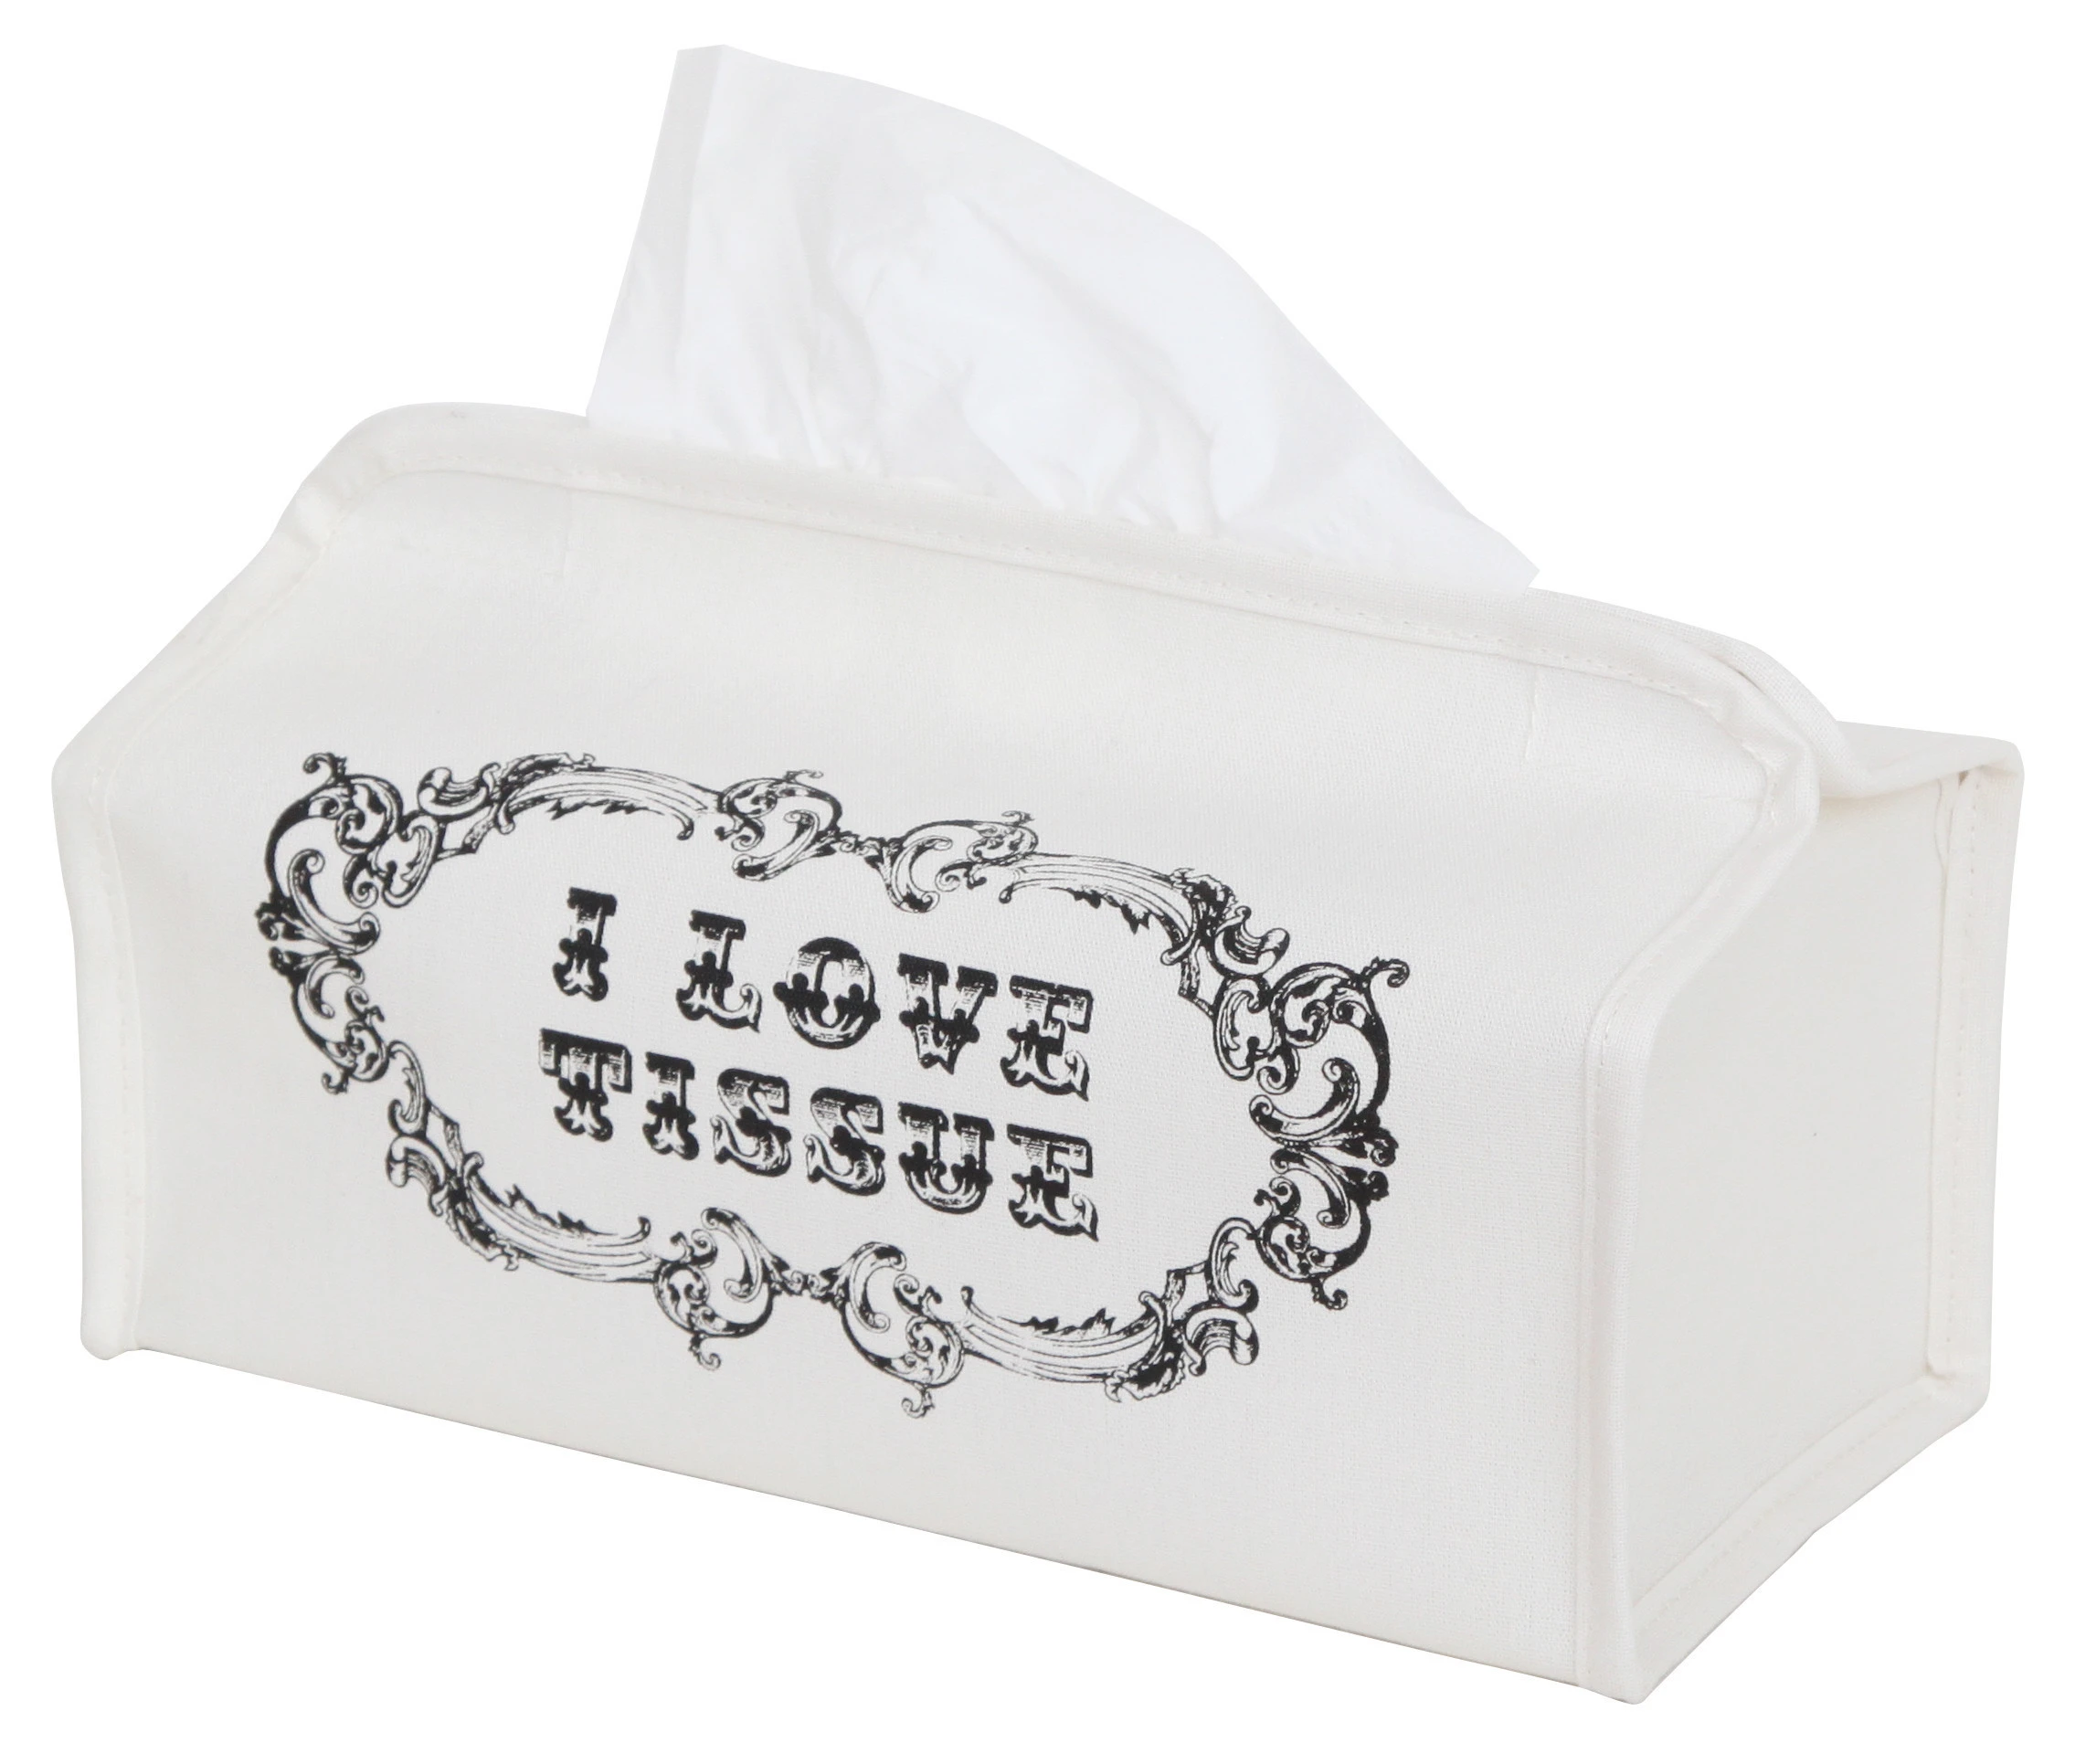 Brand Tissue Box Made In China Superior Quality Waterproof White Tissue Box